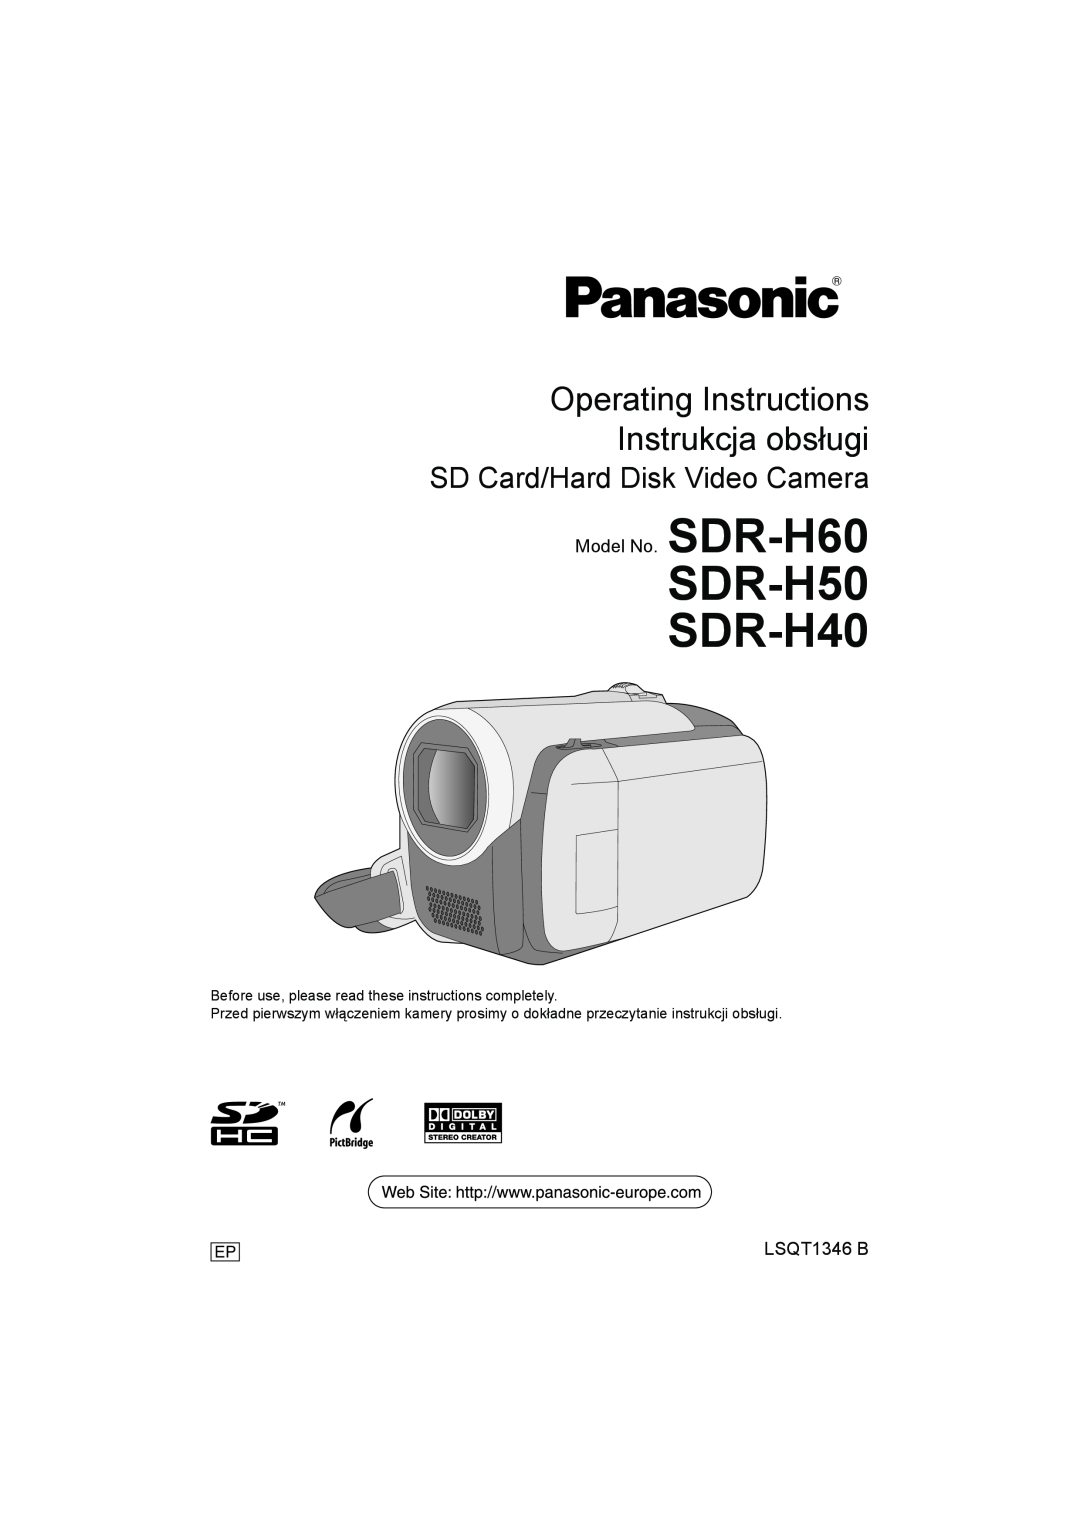 Panasonic operating instructions Model No. SDR-H60, LSQT1346 B, SDR-H50 SDR-H40, SD Card/Hard Disk Video Camera 